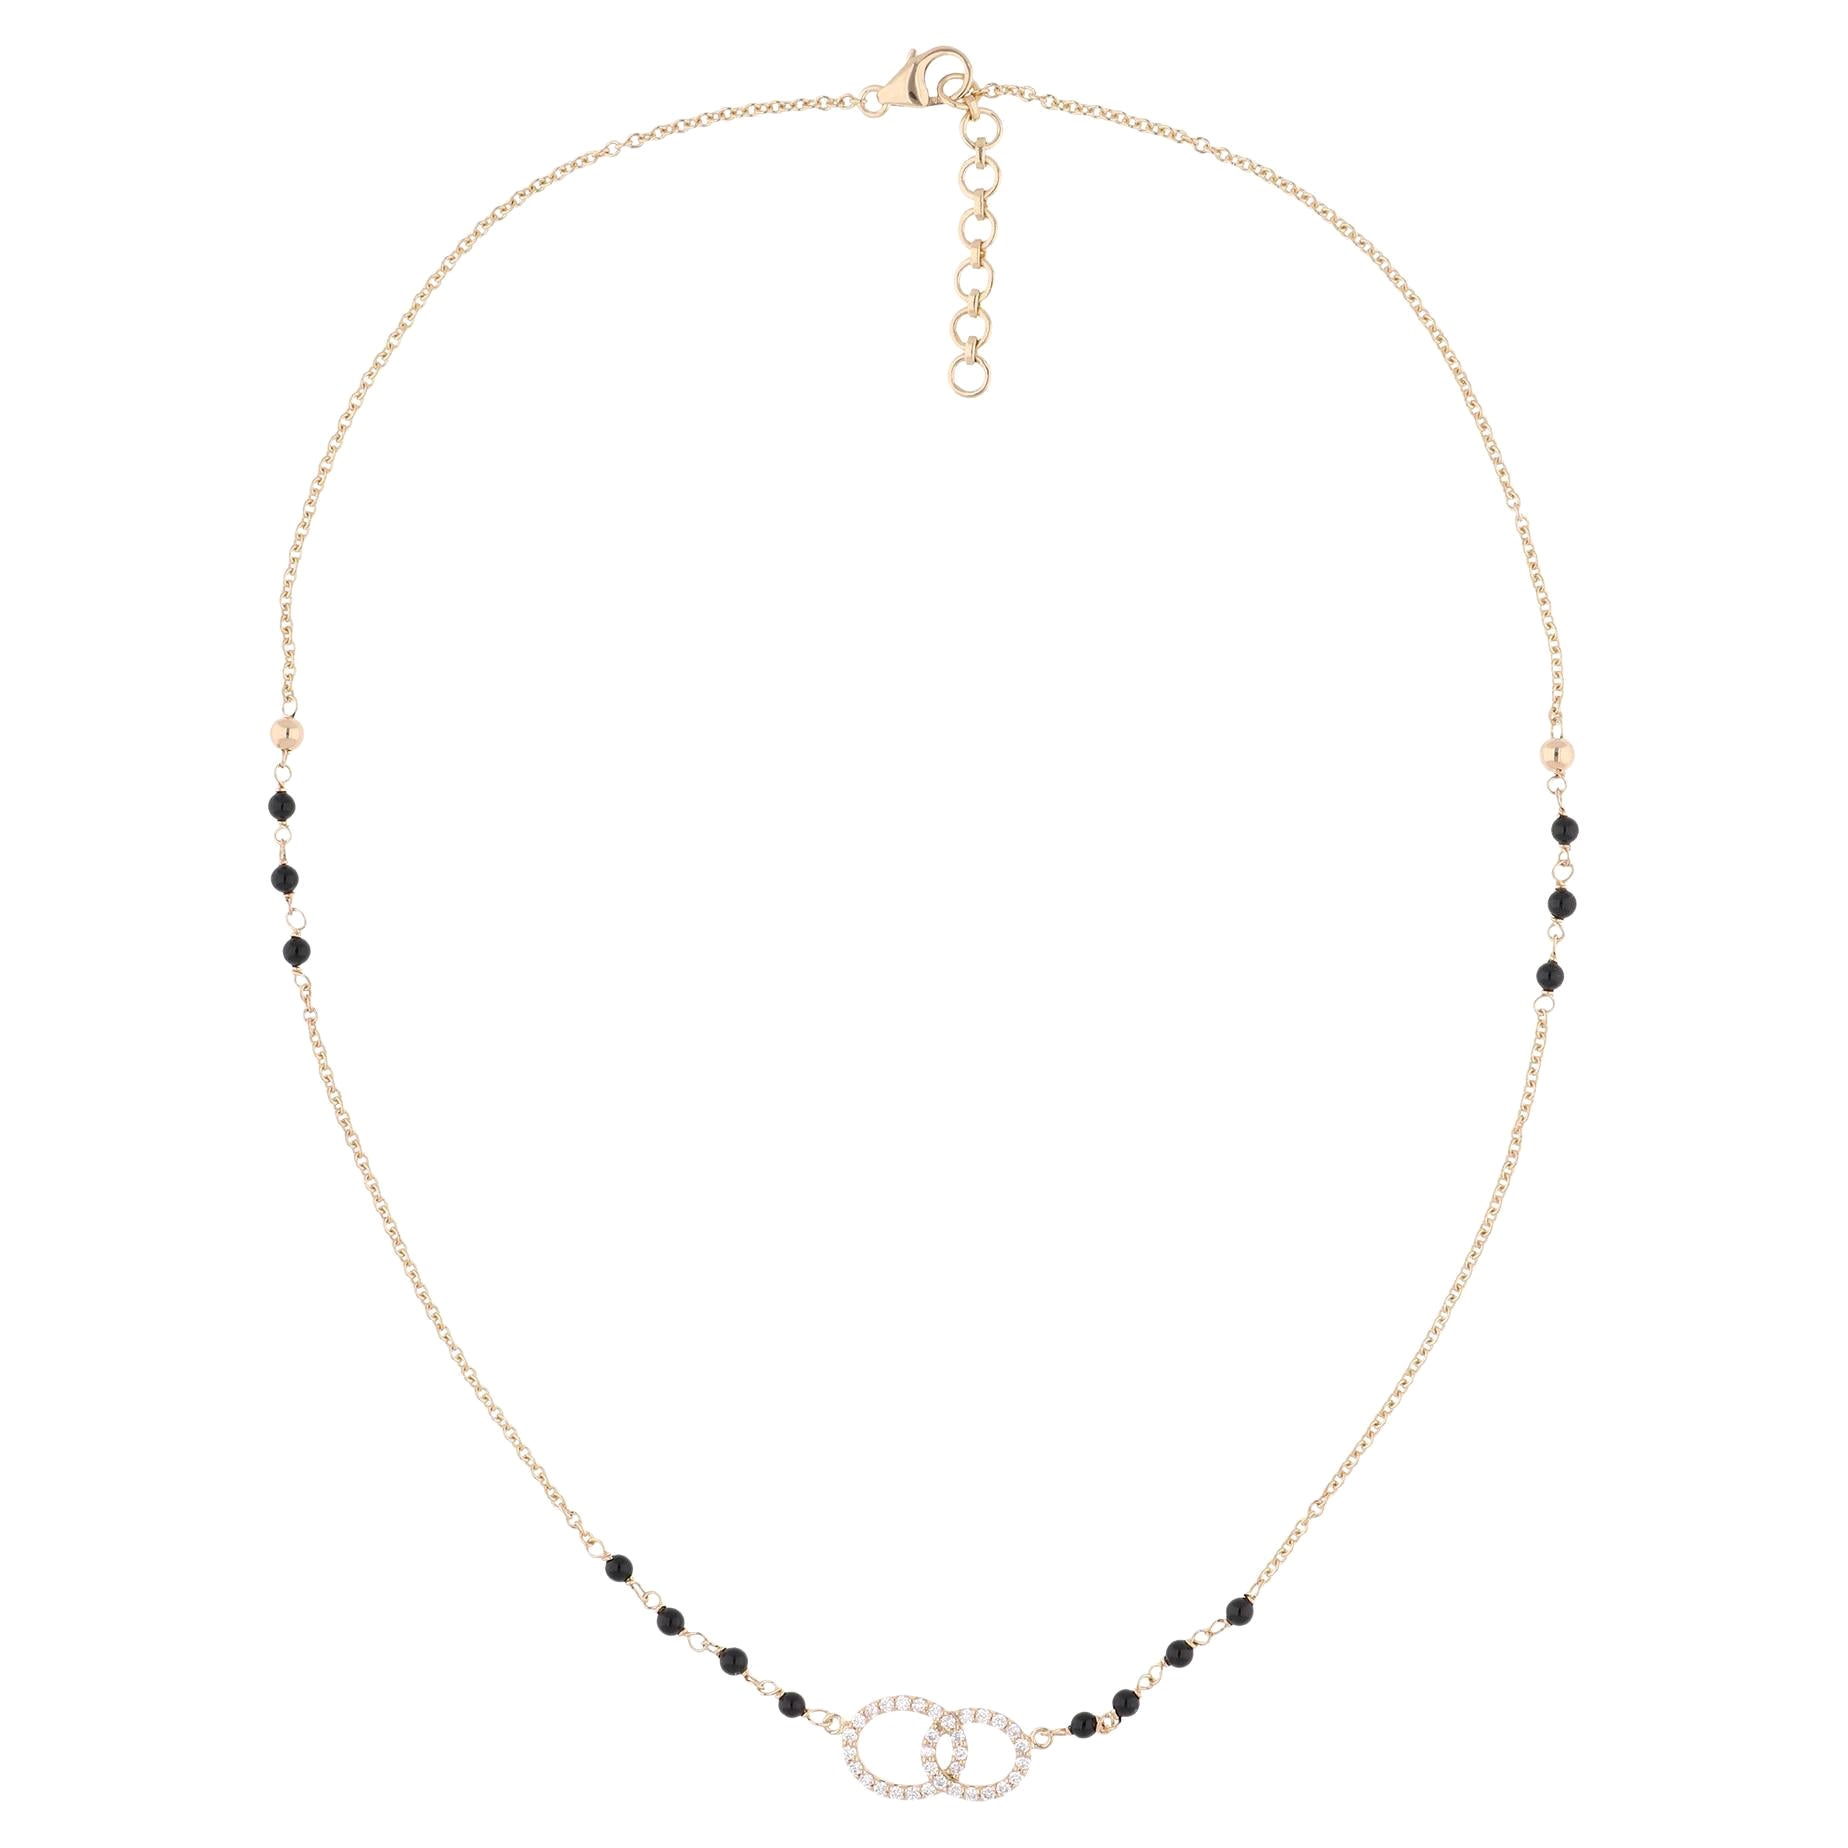 Gemstone Beads Charm Necklace Diamond Pave 14 Karat Yellow Gold Handmade jewelry